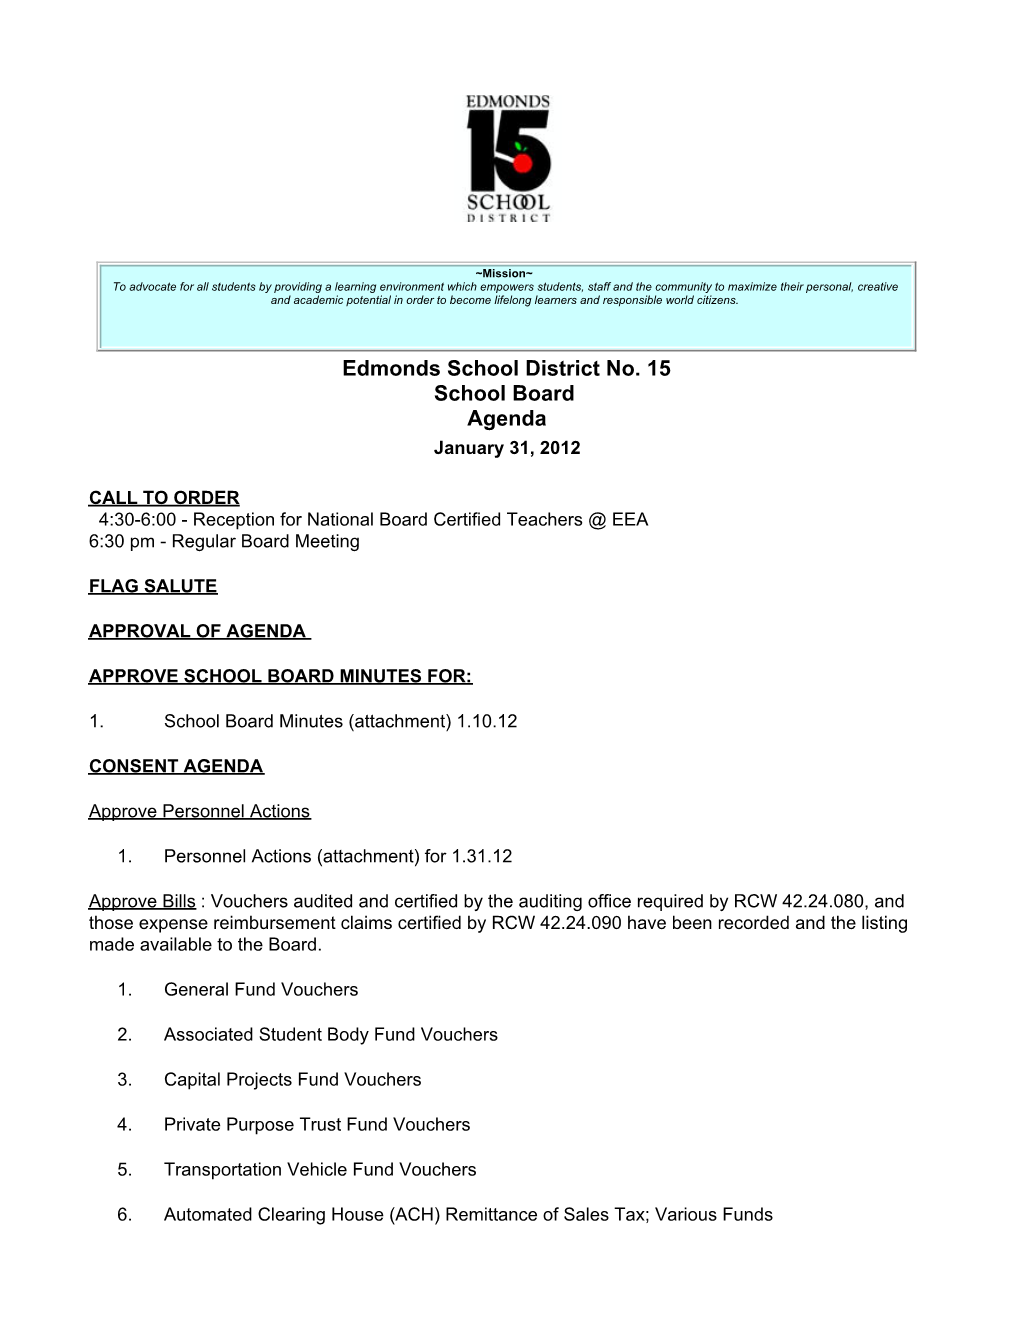 Edmonds School District No. 15 School Board Agenda January 31, 2012